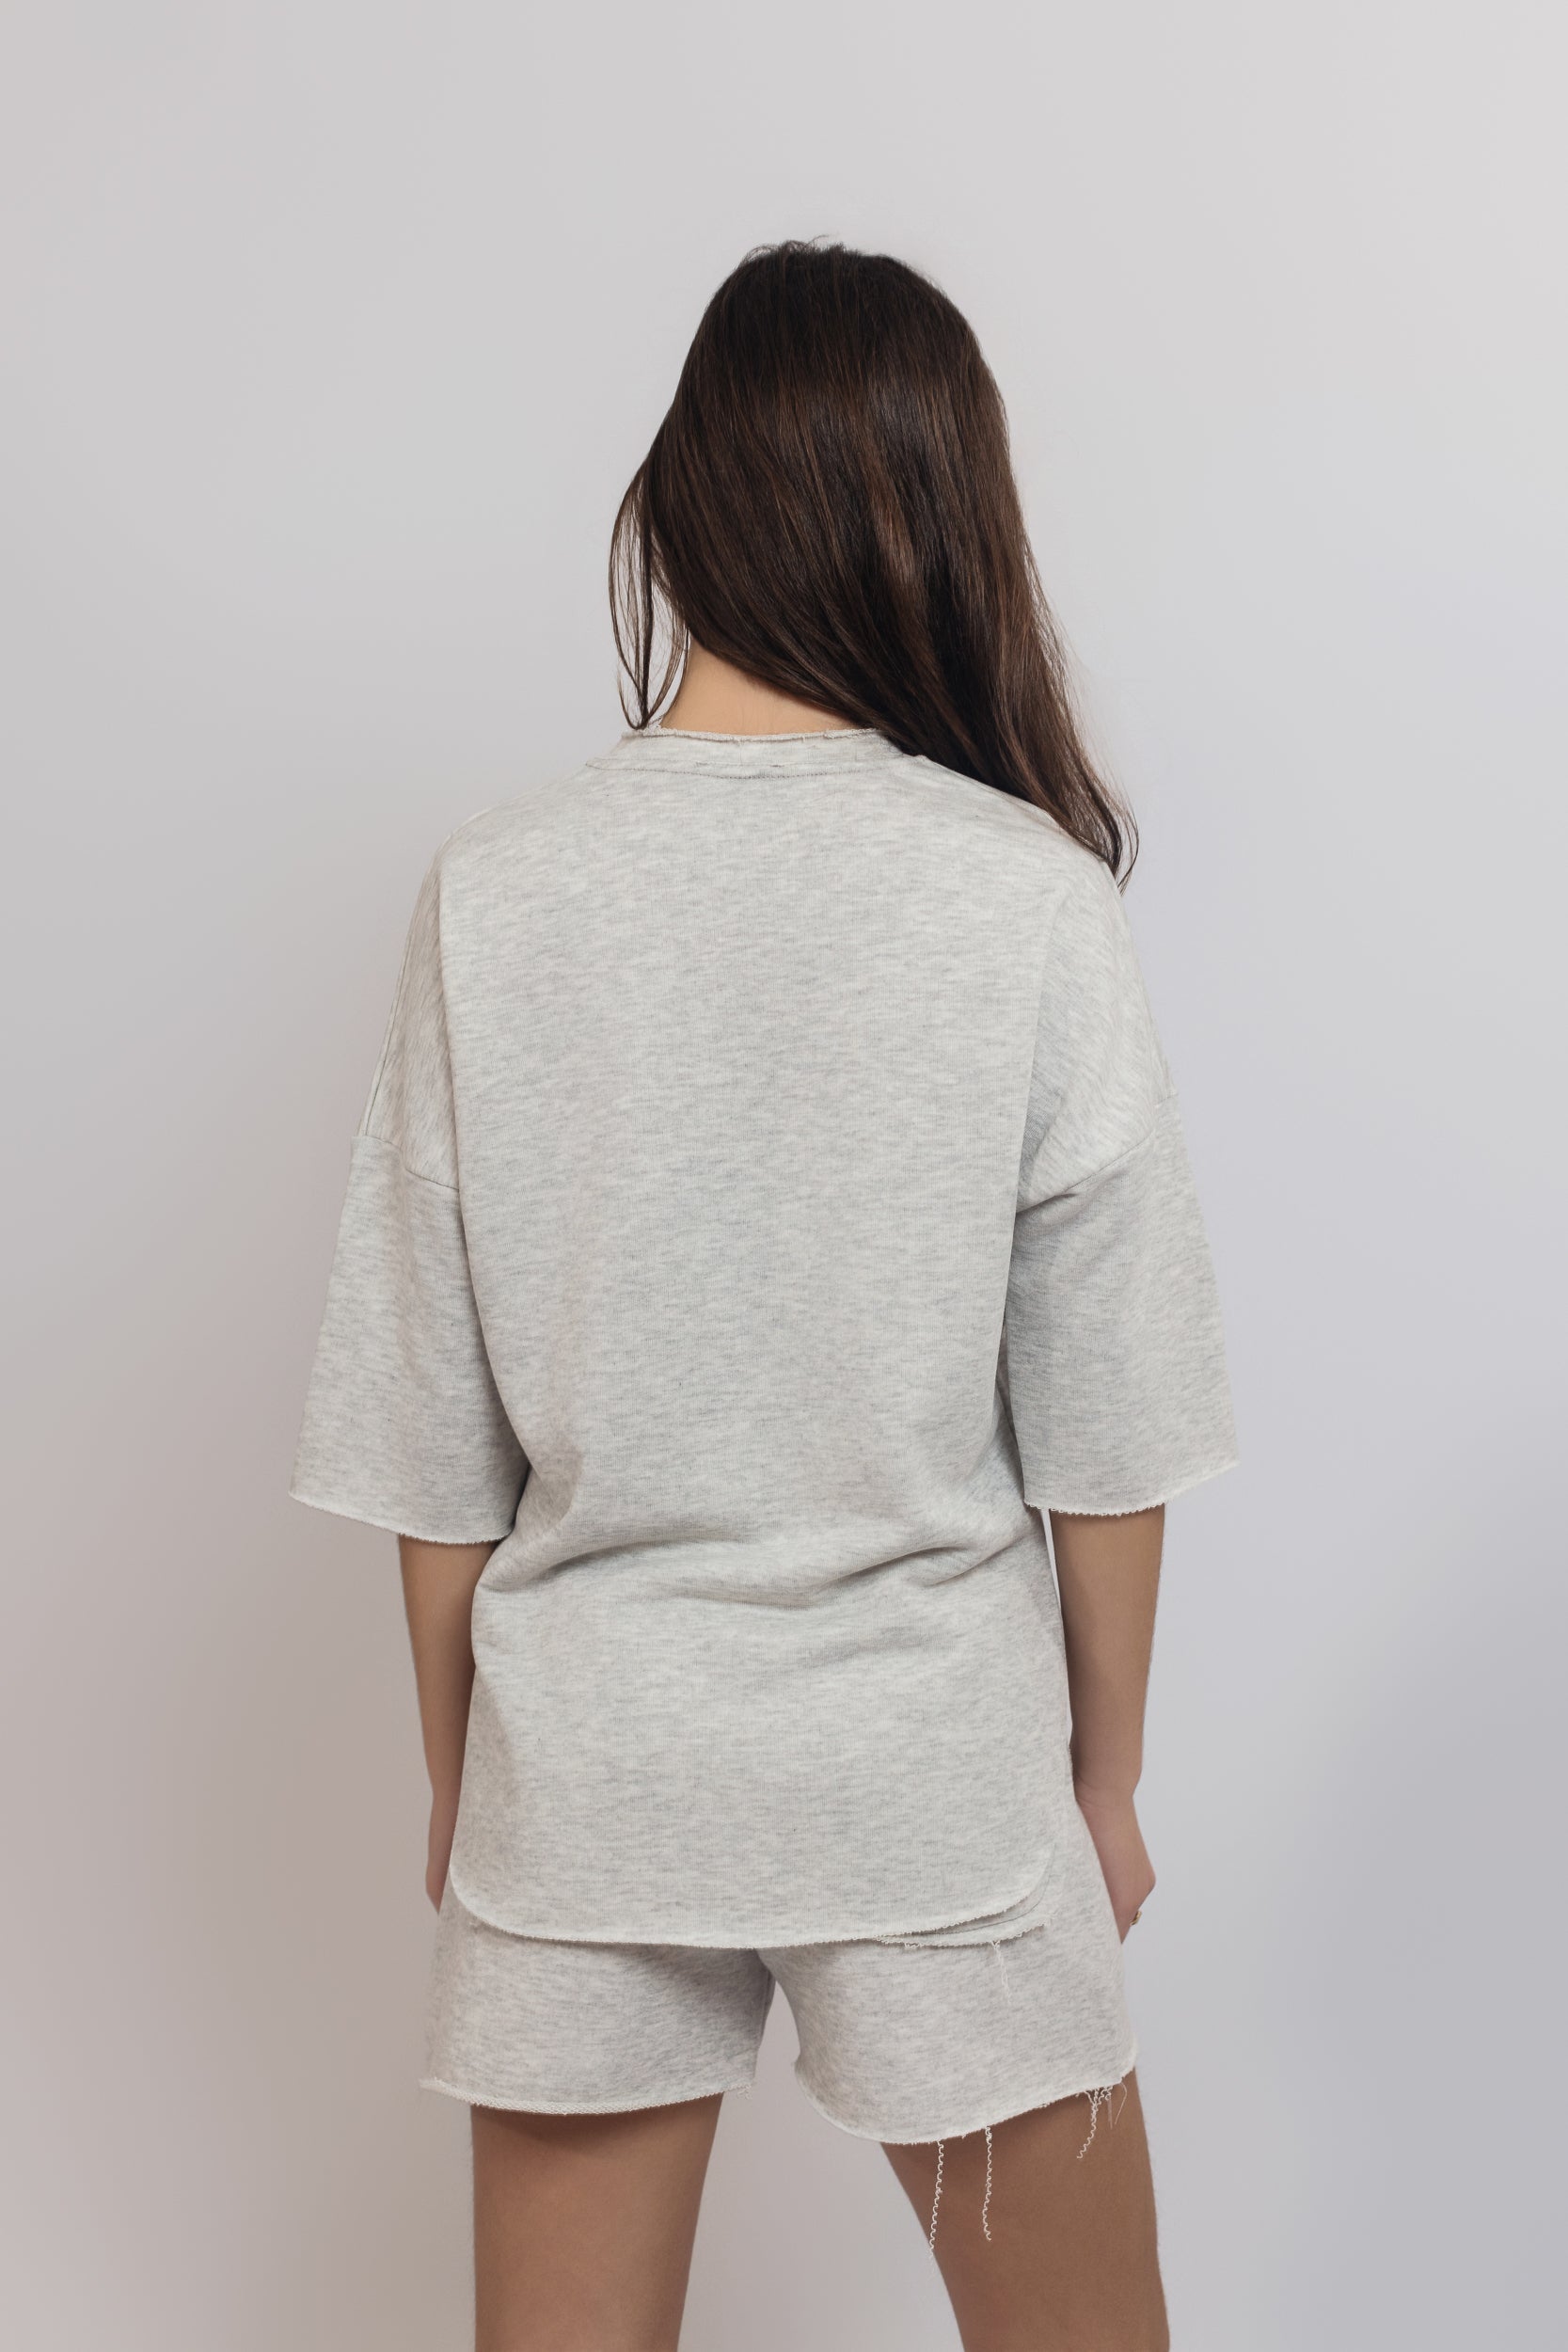 Oversized Sweatshirt With Pockets For Girls - Grey